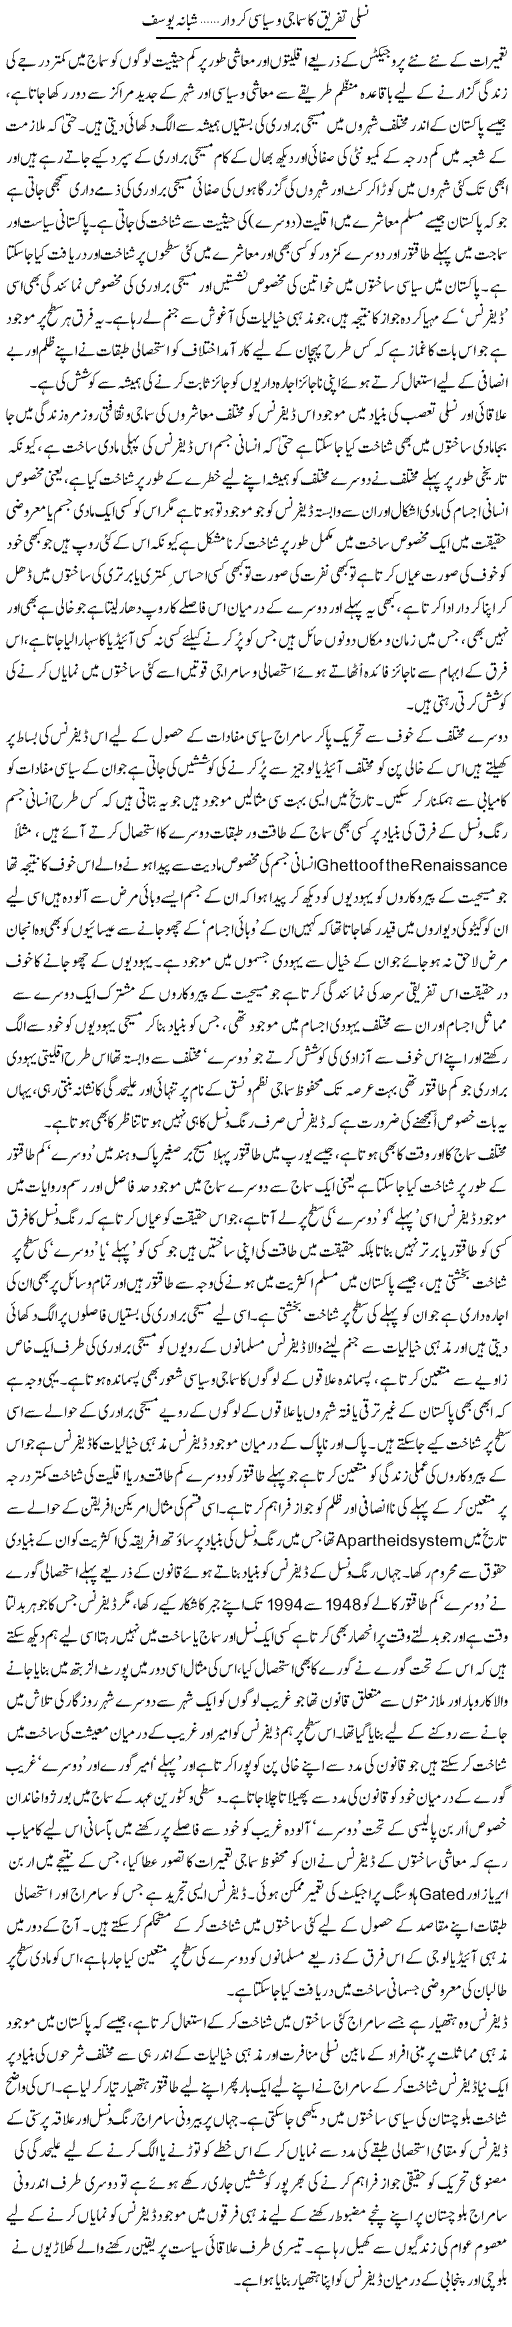 Nasli Tafriq Ka Samaji Our Siasi Kirdar 2 | Shabana Yousaf | Daily Urdu Columns